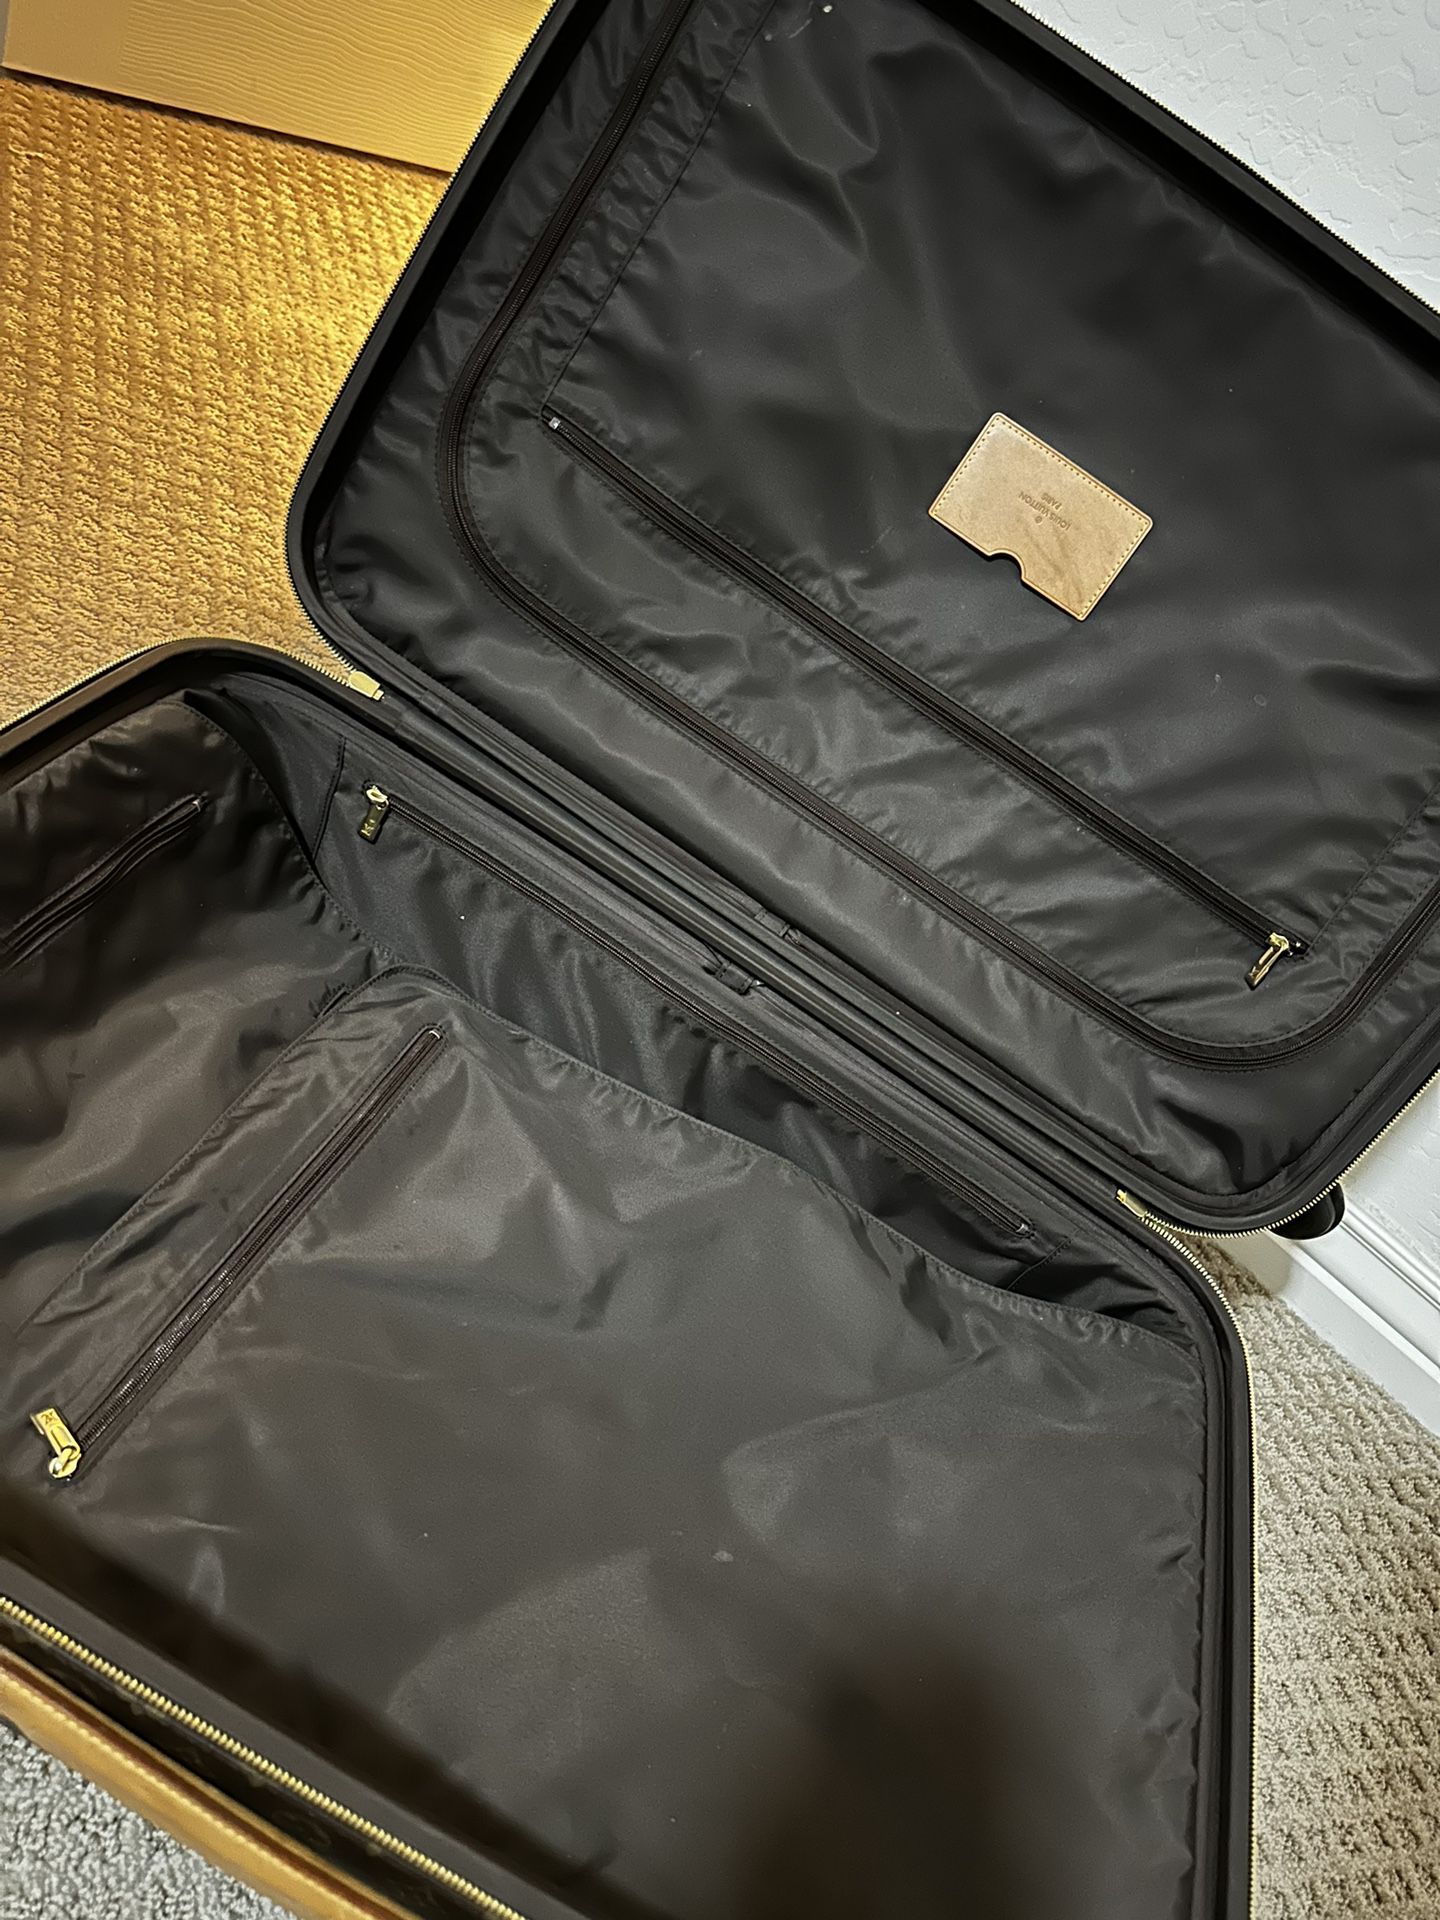 Louis Vuitton® Horizon 55  Louis vuitton luggage, Louis vuitton, Monogram  canvas